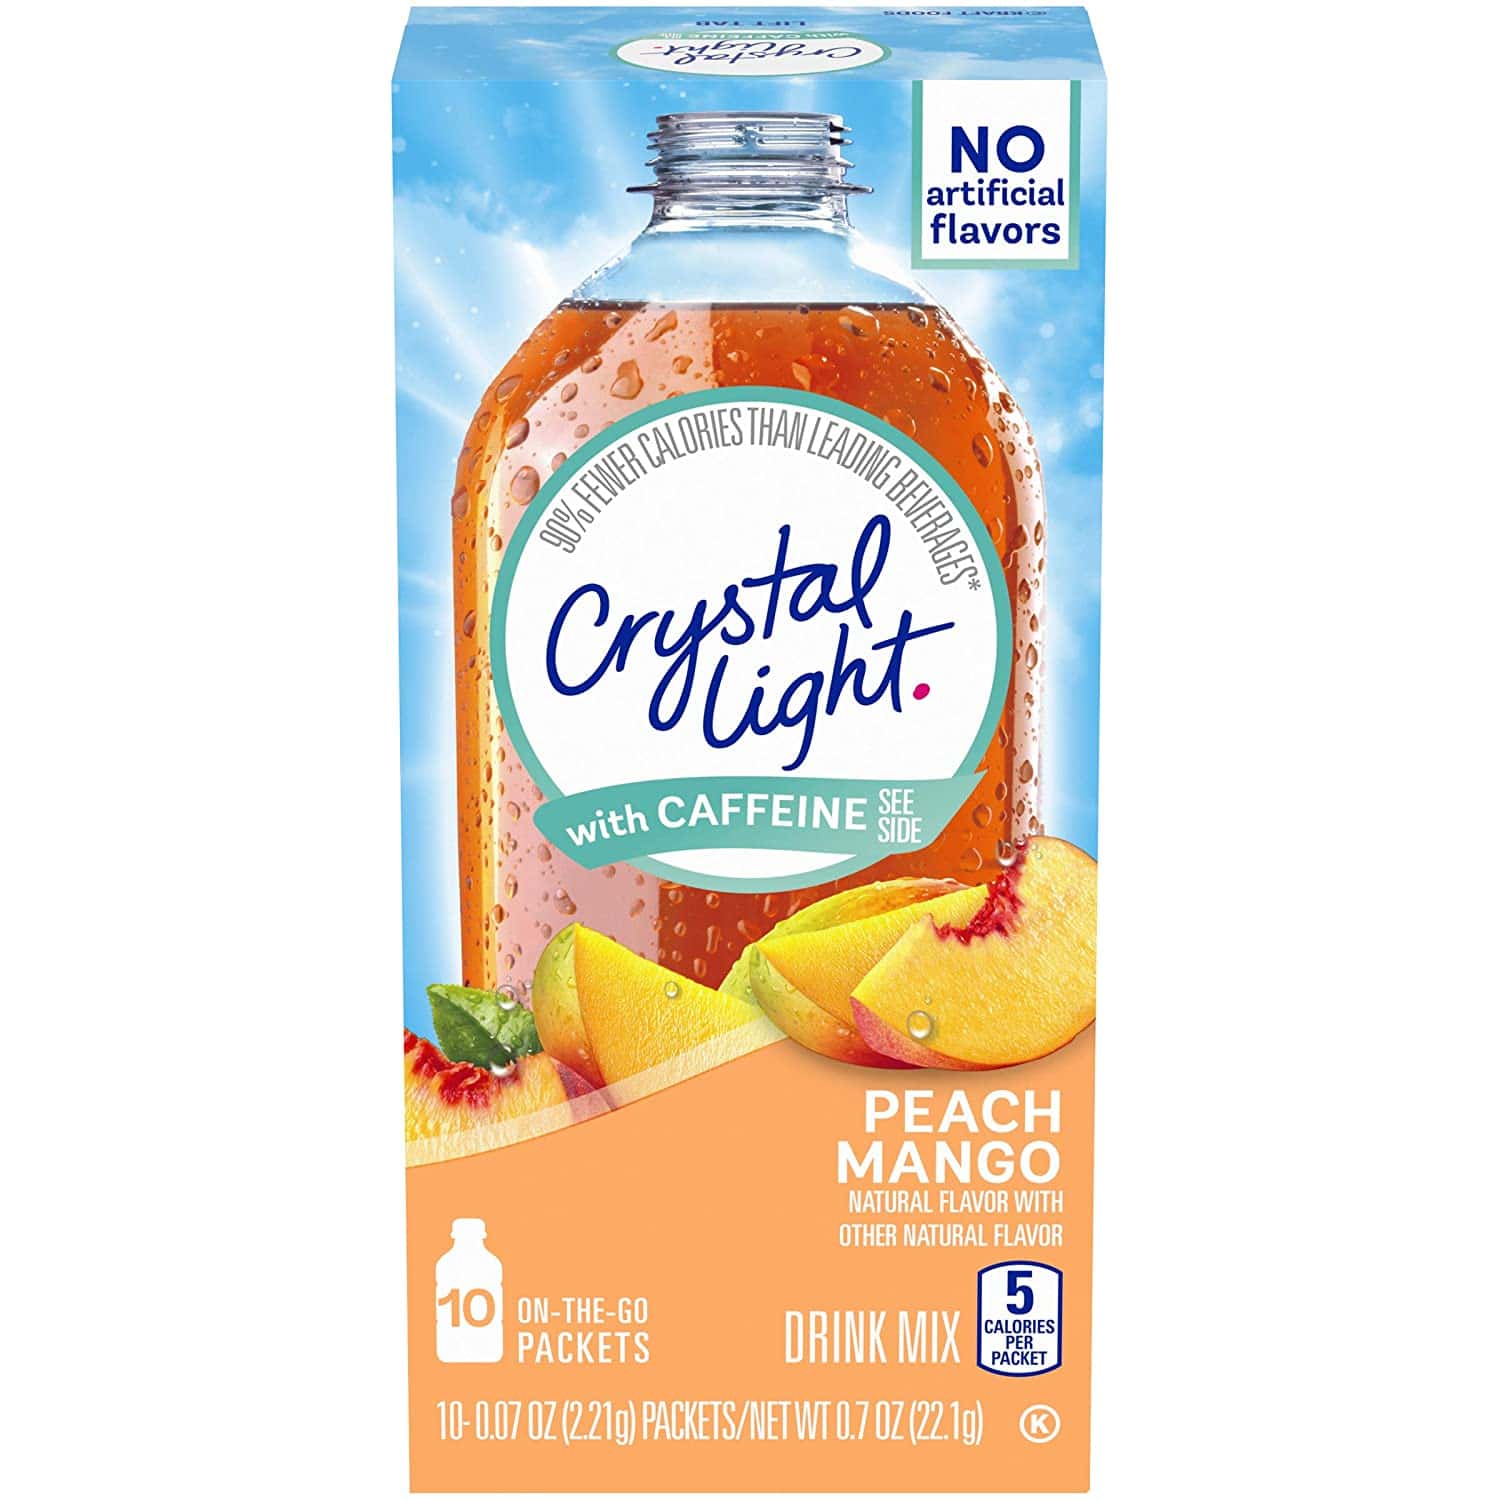 5. Crystal Light Peach Mango Drink Mix